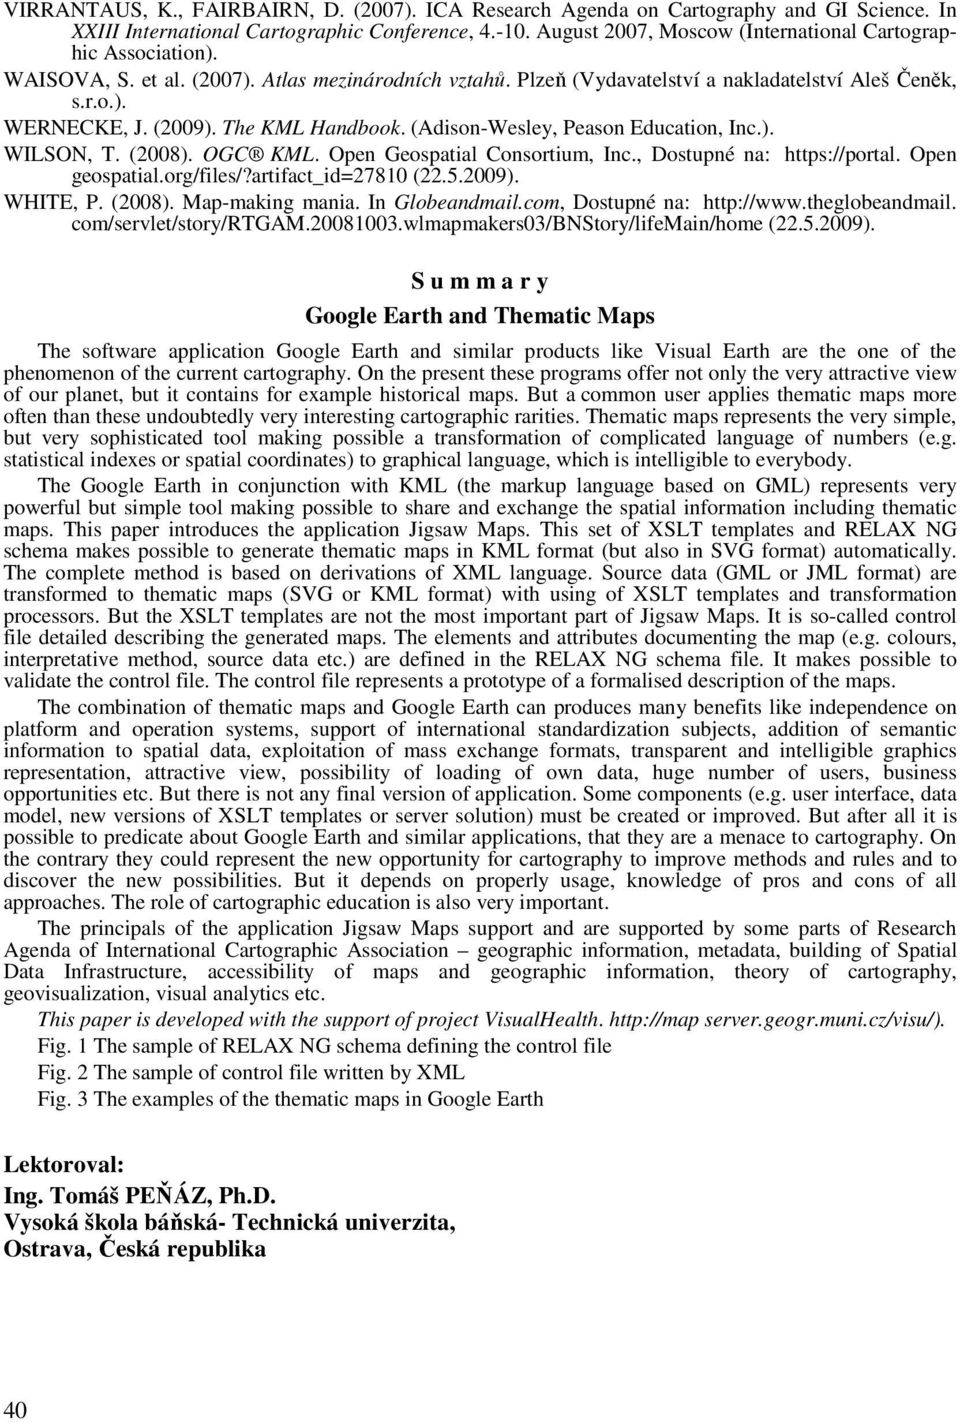 The KML Handbook. (Adison-Wesley, Peason Education, Inc.). WILSON, T. (2008). OGC KML. Open Geospatial Consortium, Inc., Dostupné na: https://portal. Open geospatial.org/files/?artifact_id=27810 (22.